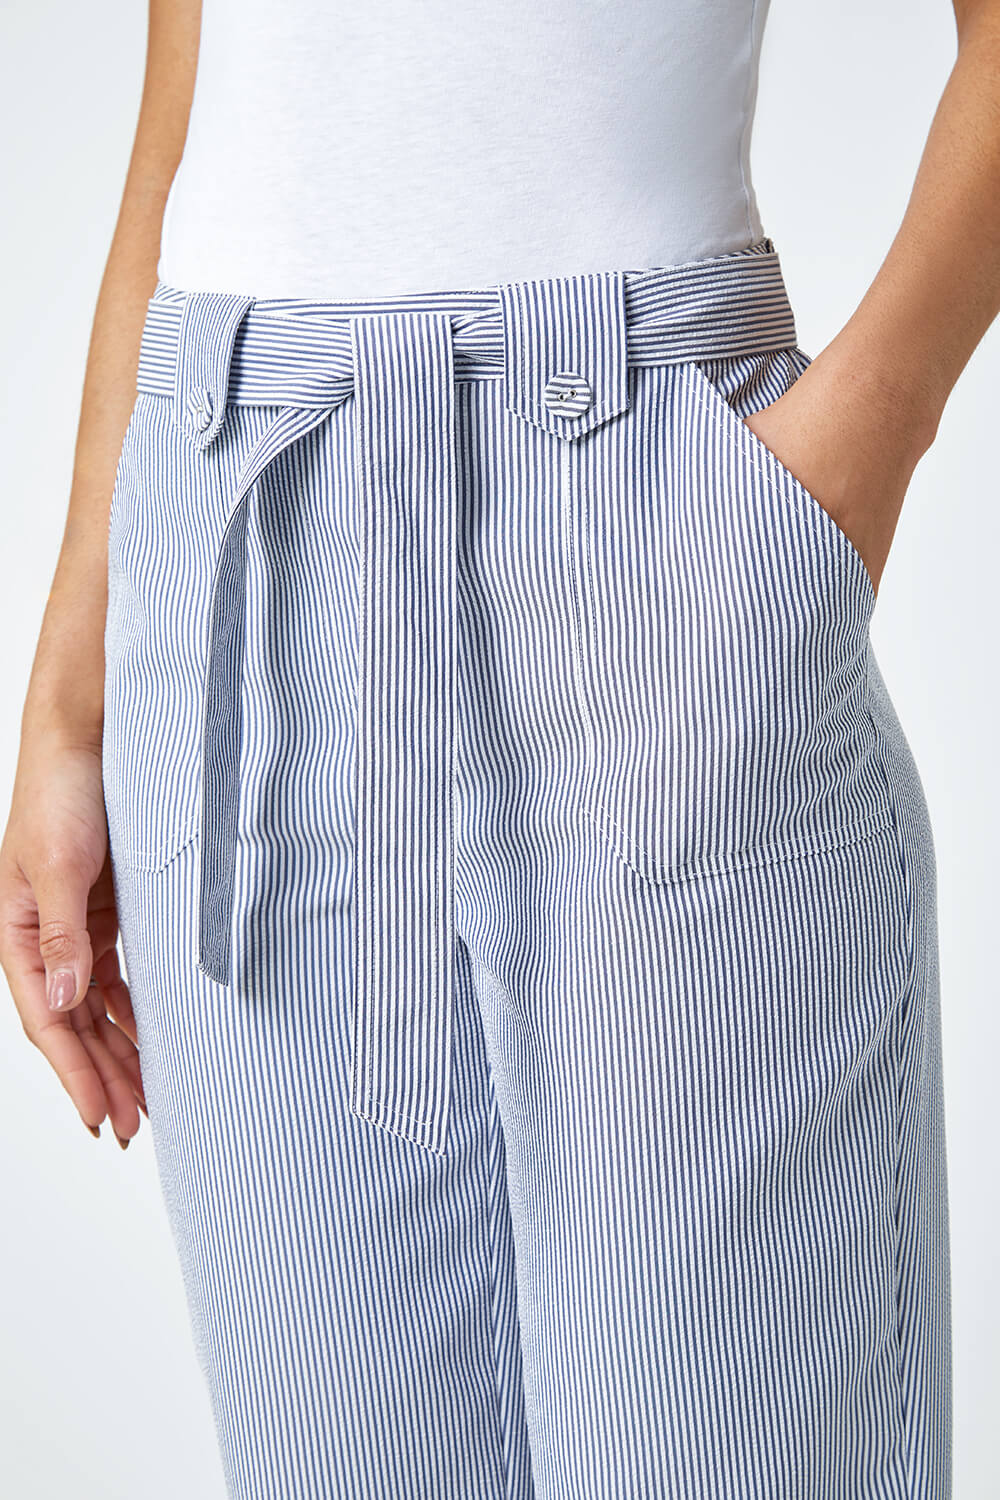 Denim Stripe Print Tie Waist Cropped Trousers, Image 5 of 5